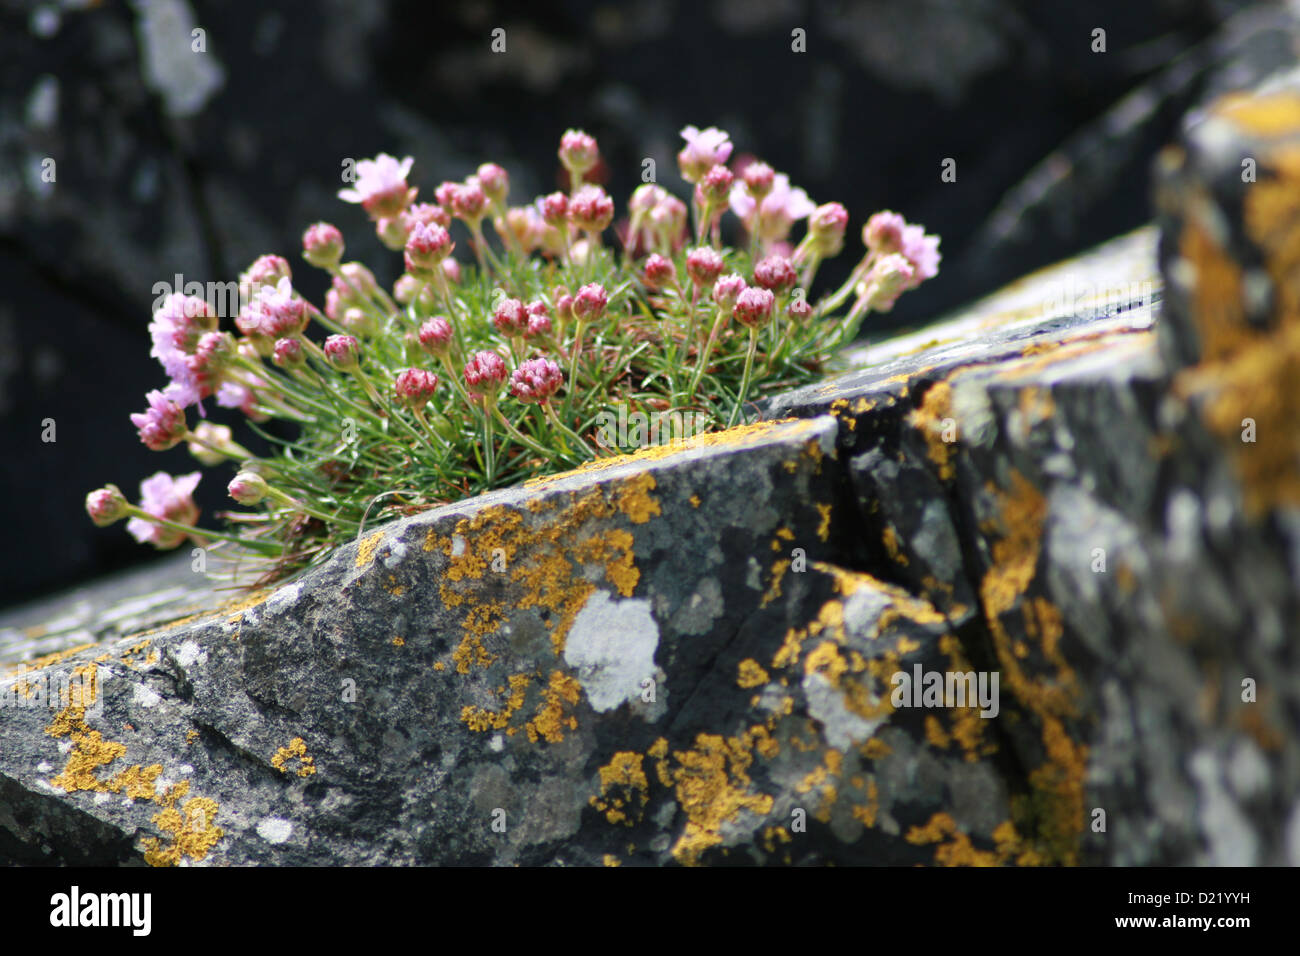 Pretty flowers growing on rocks Stock Photo